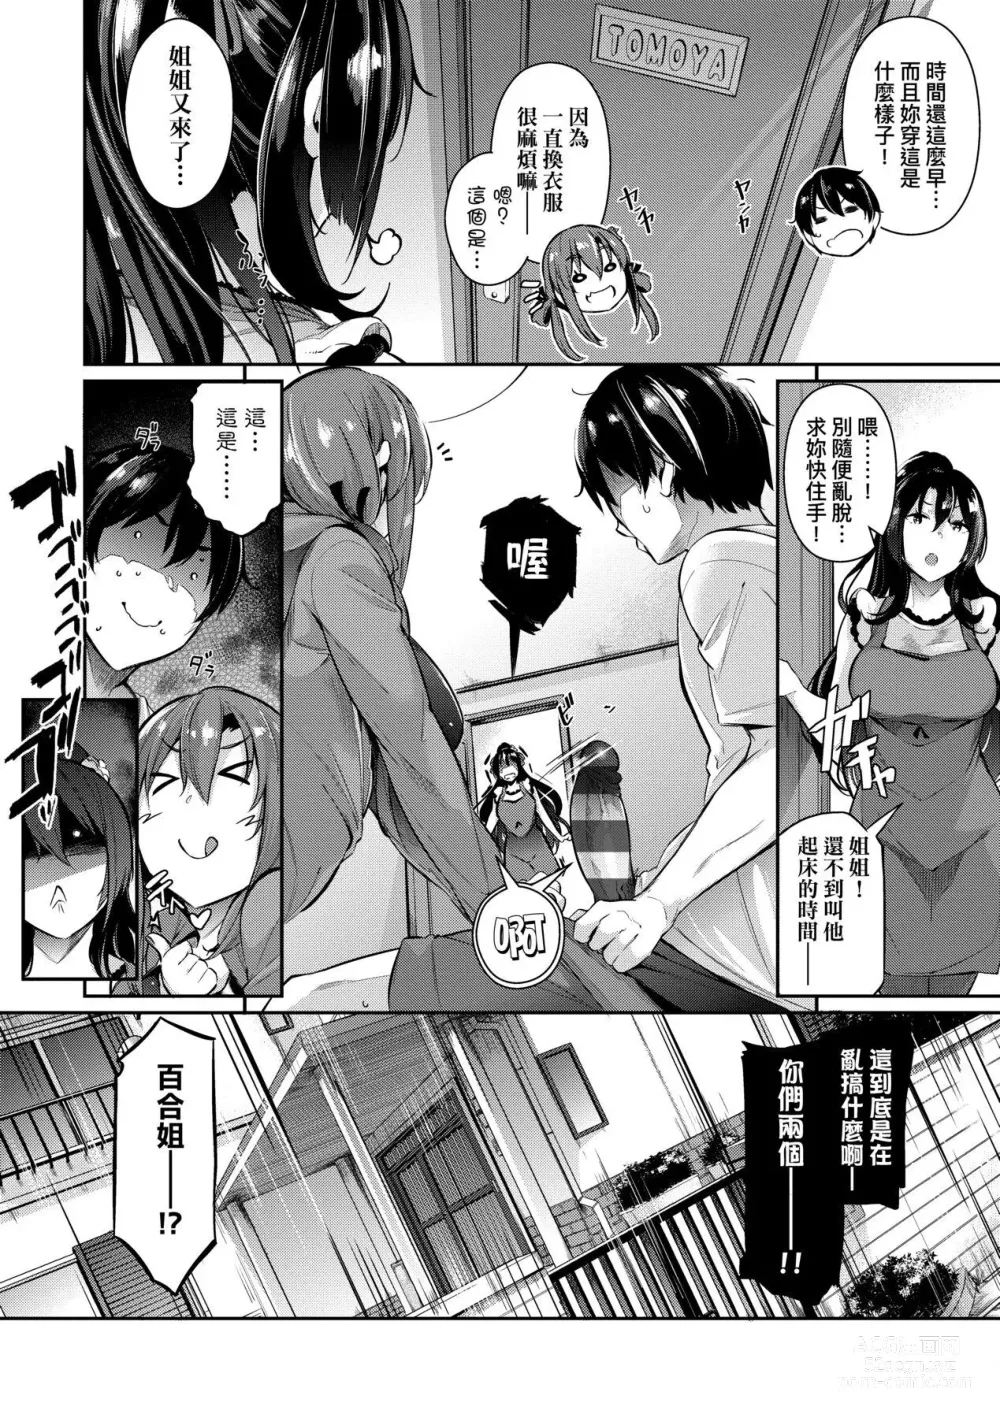 Page 15 of manga Garden 戀乳花園 特裝版 +ampoule『0』 +2特典